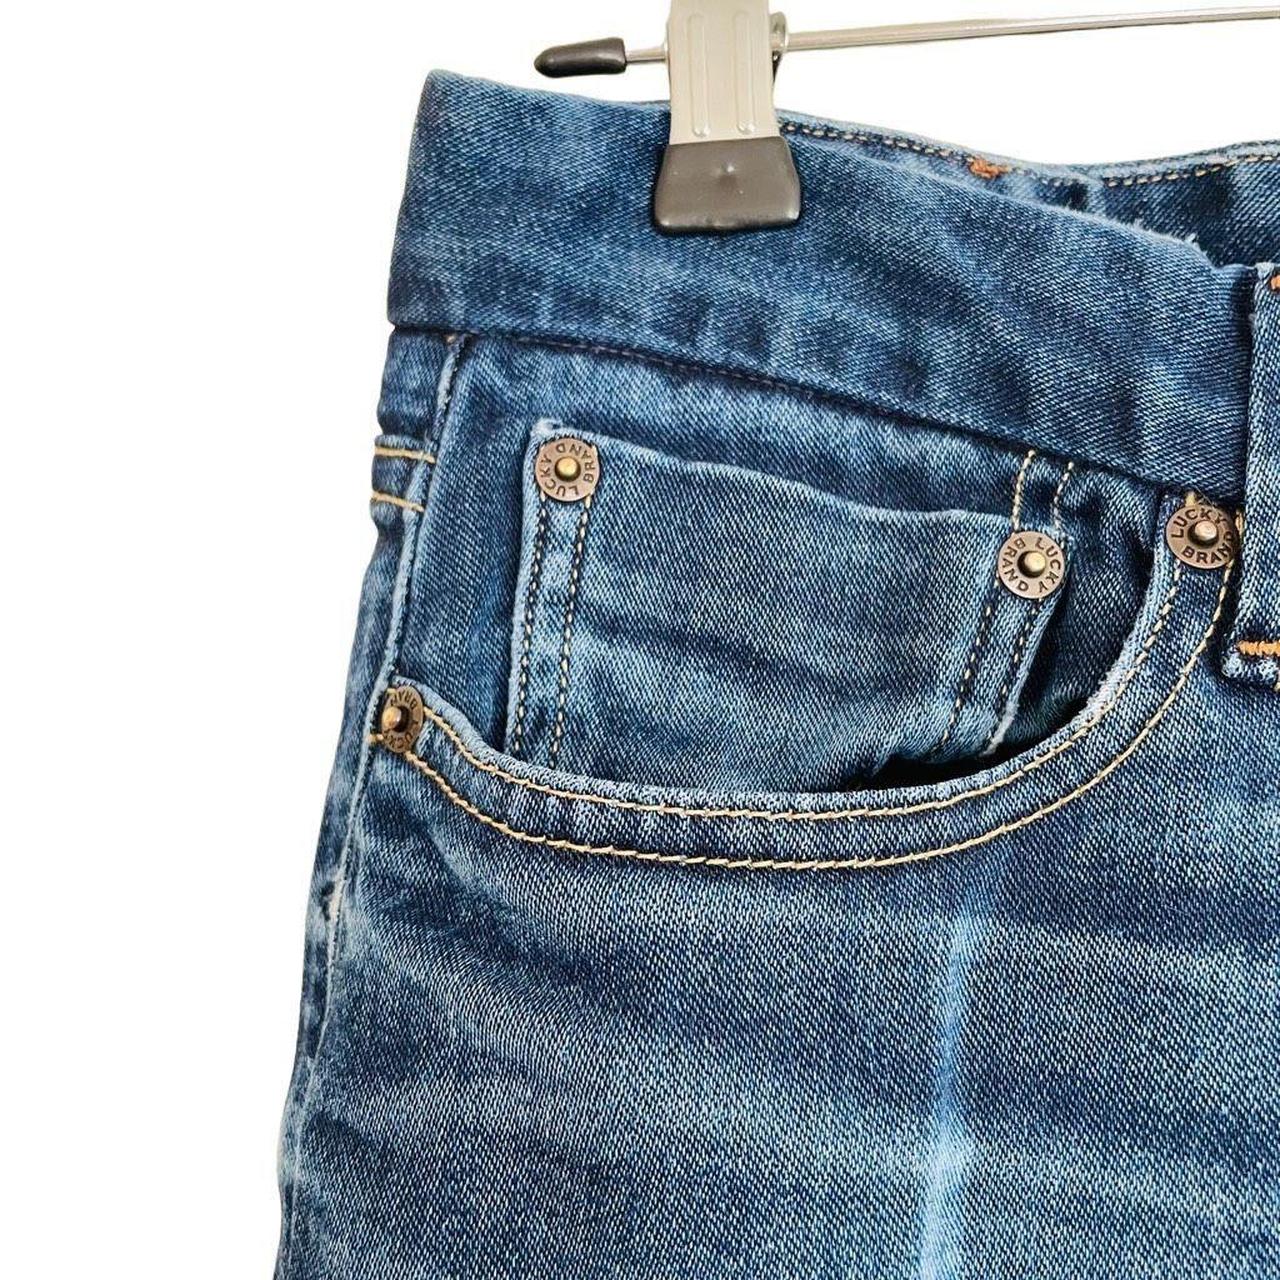 NWOT Lucky Brand Sweet Boot Jeans DETAILS 9 bottom - Depop